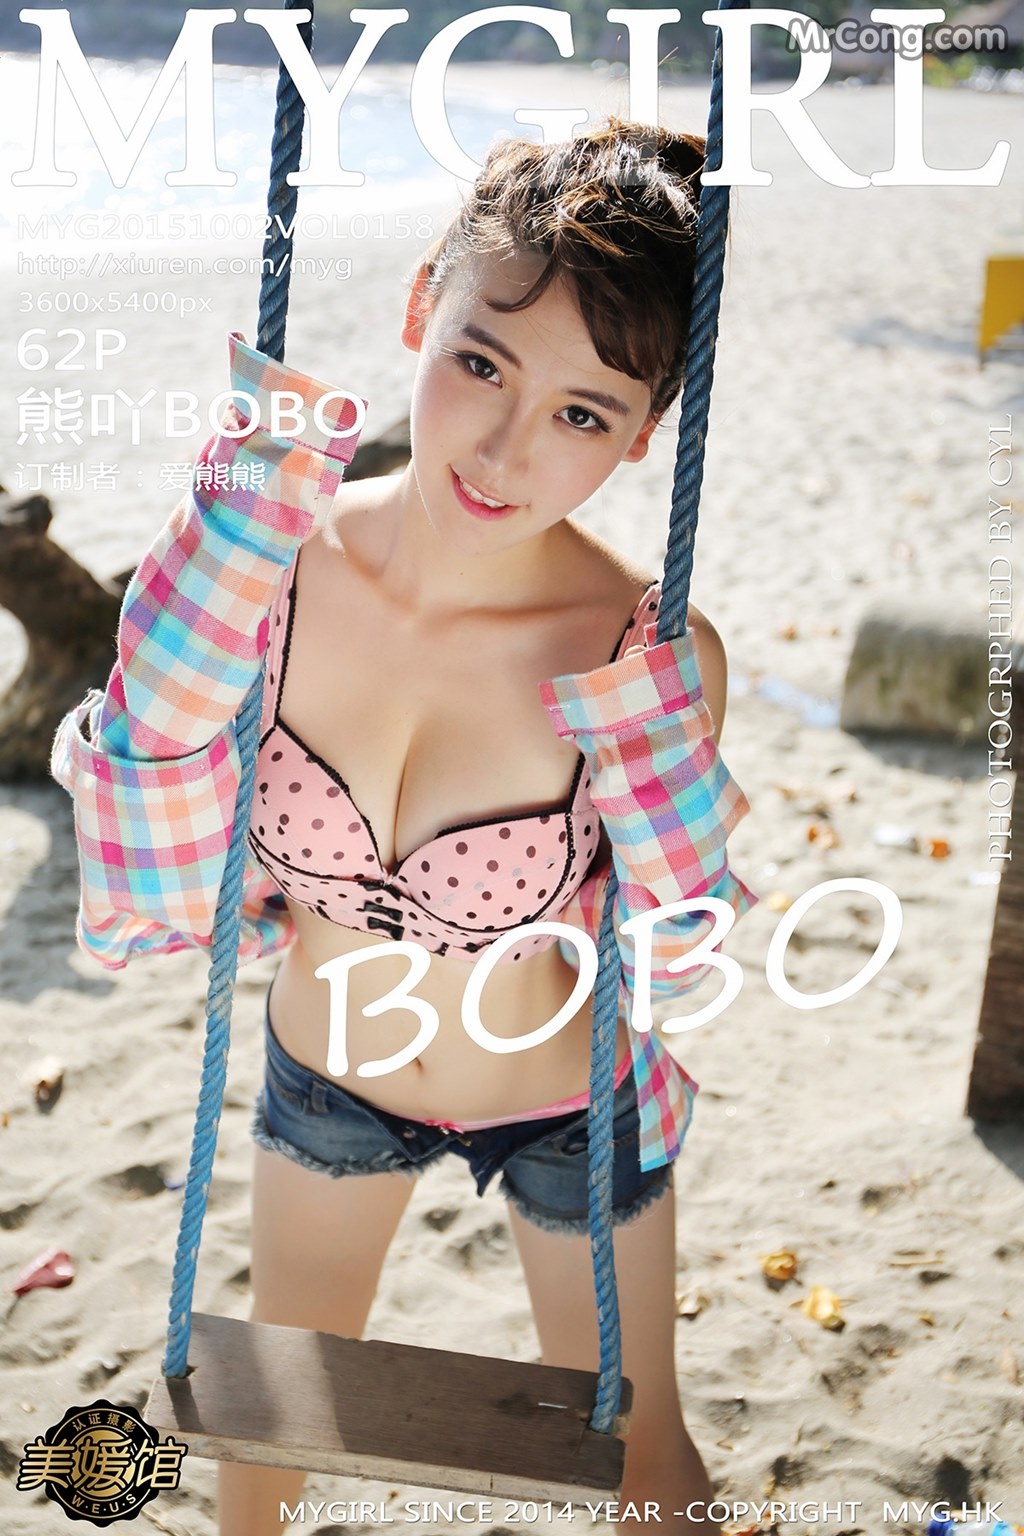 MyGirl Vol.158: BOBO Model (熊 吖) (63 photos) photo 1-0